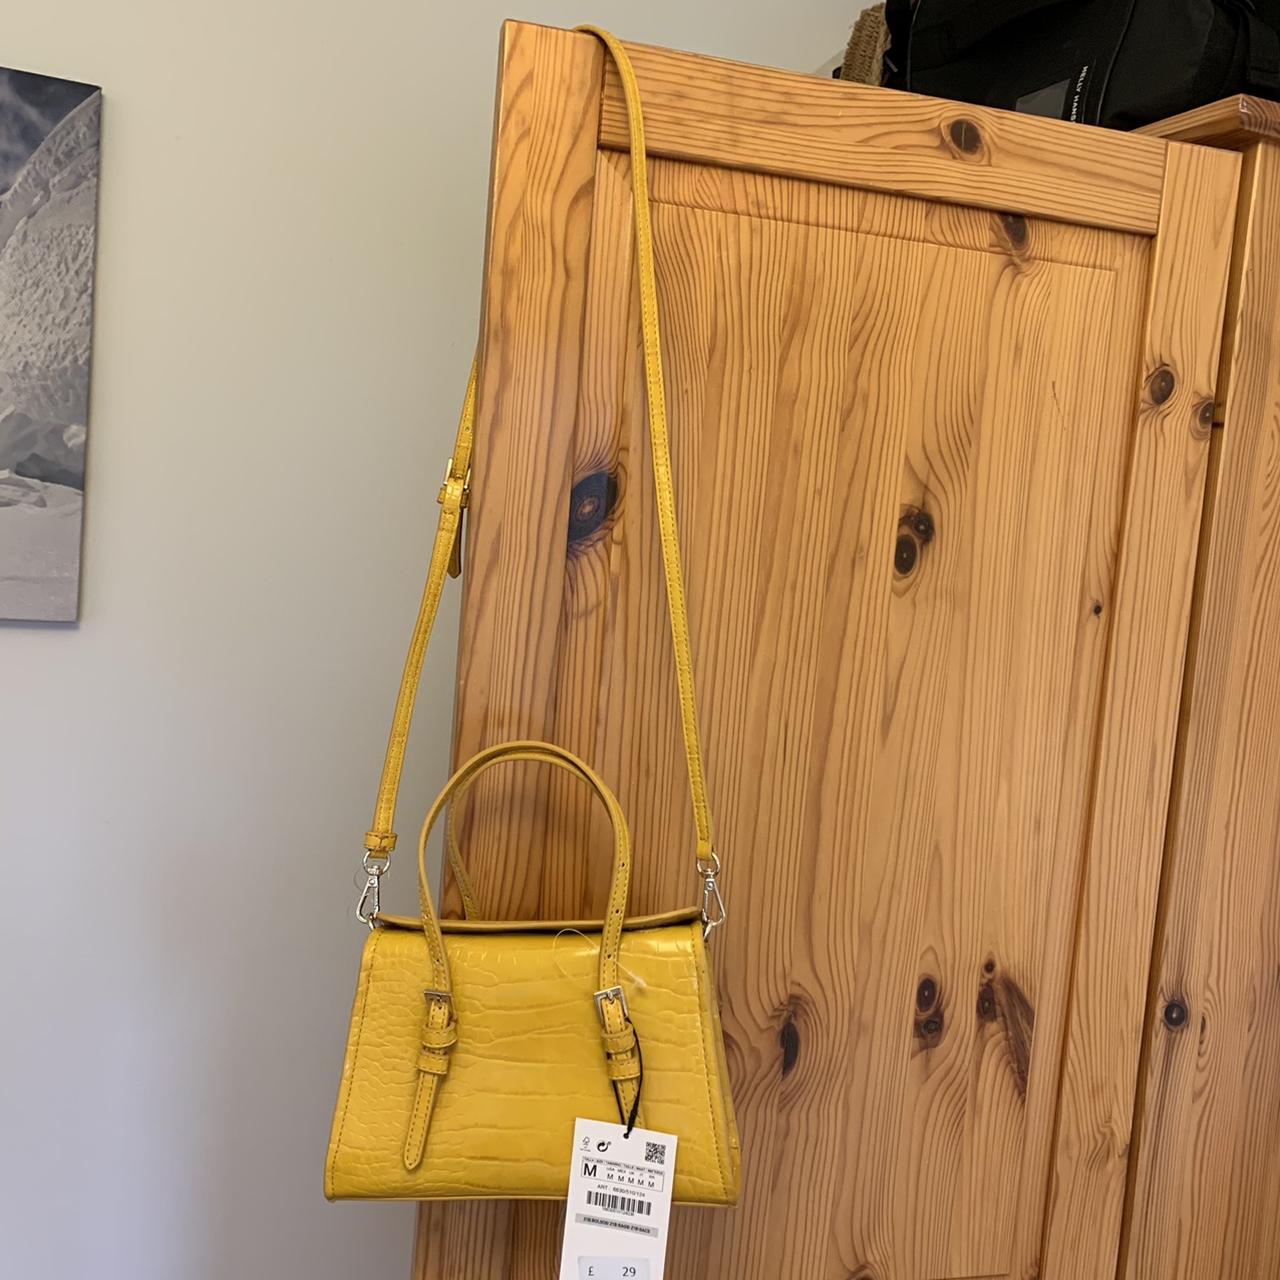 Zara mustard yellow flap mini city bag